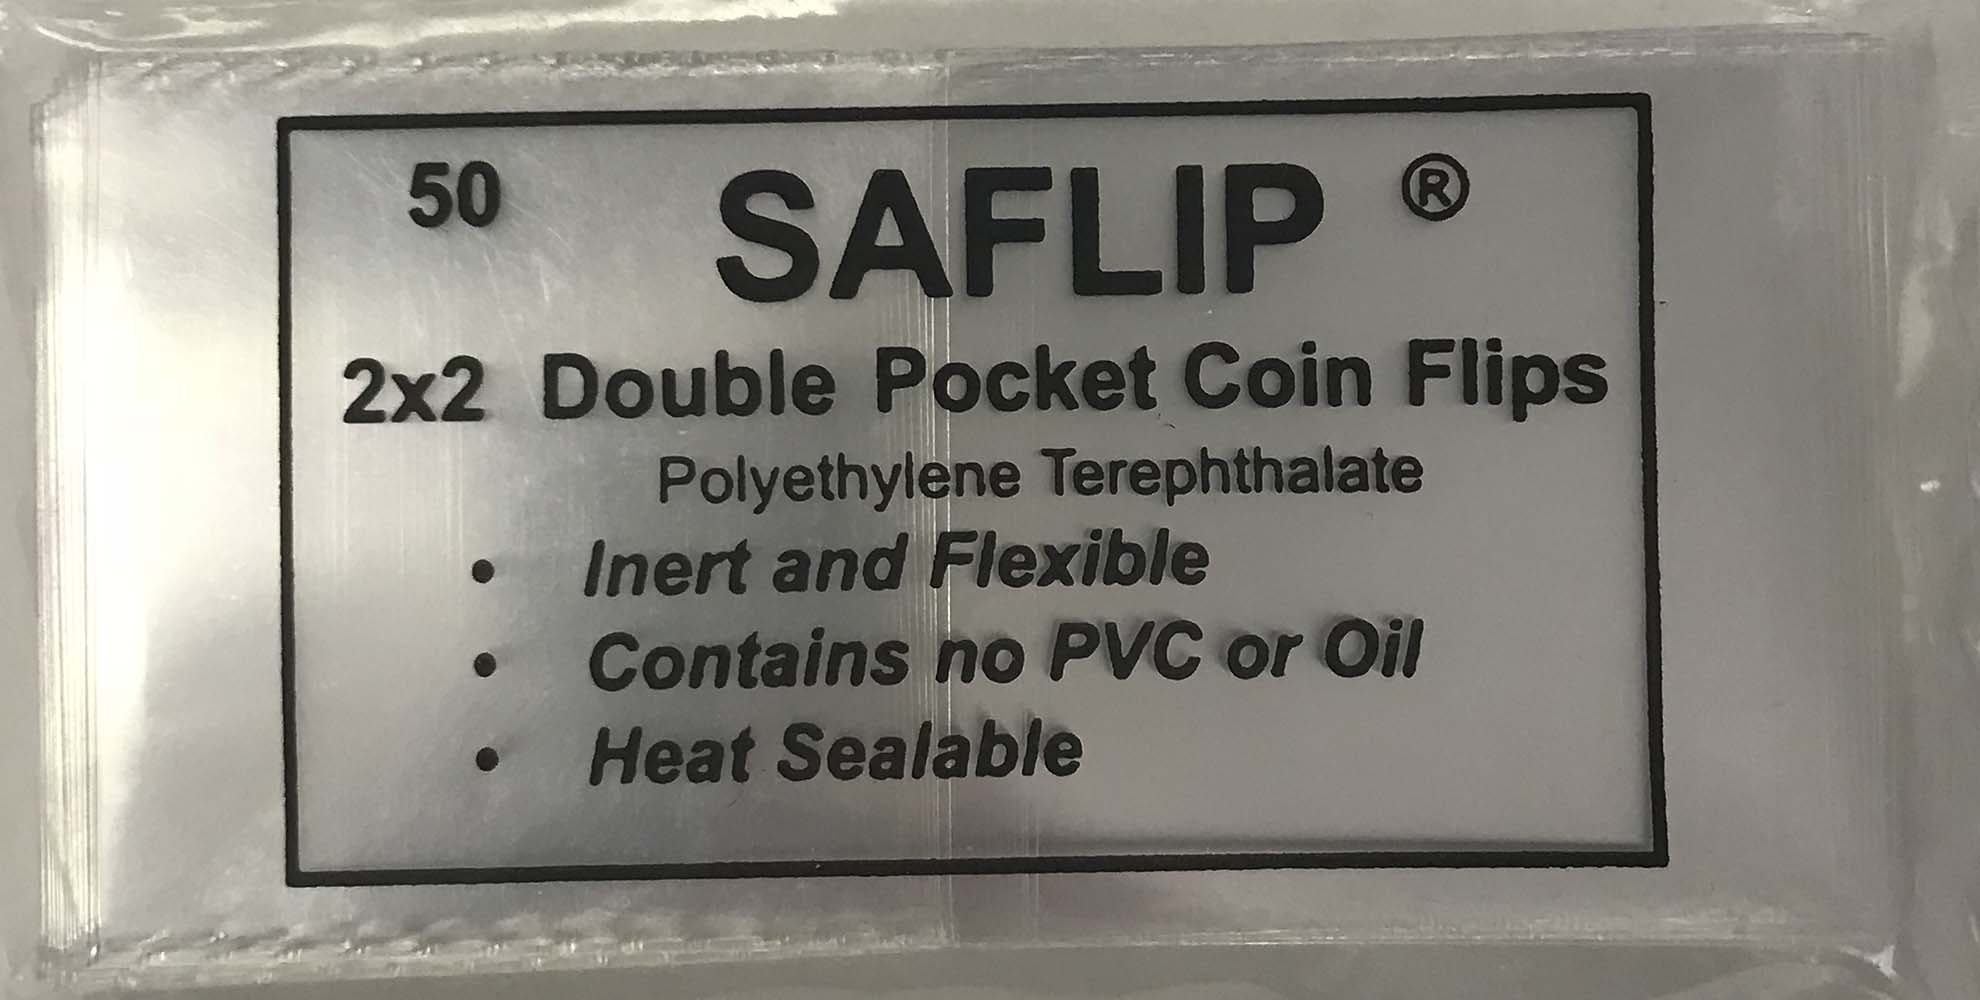 2packs of 50 Saflip 2 1/2 x 2 1/2 Double Pocket Coin Flips Pack of 100 Saflips 